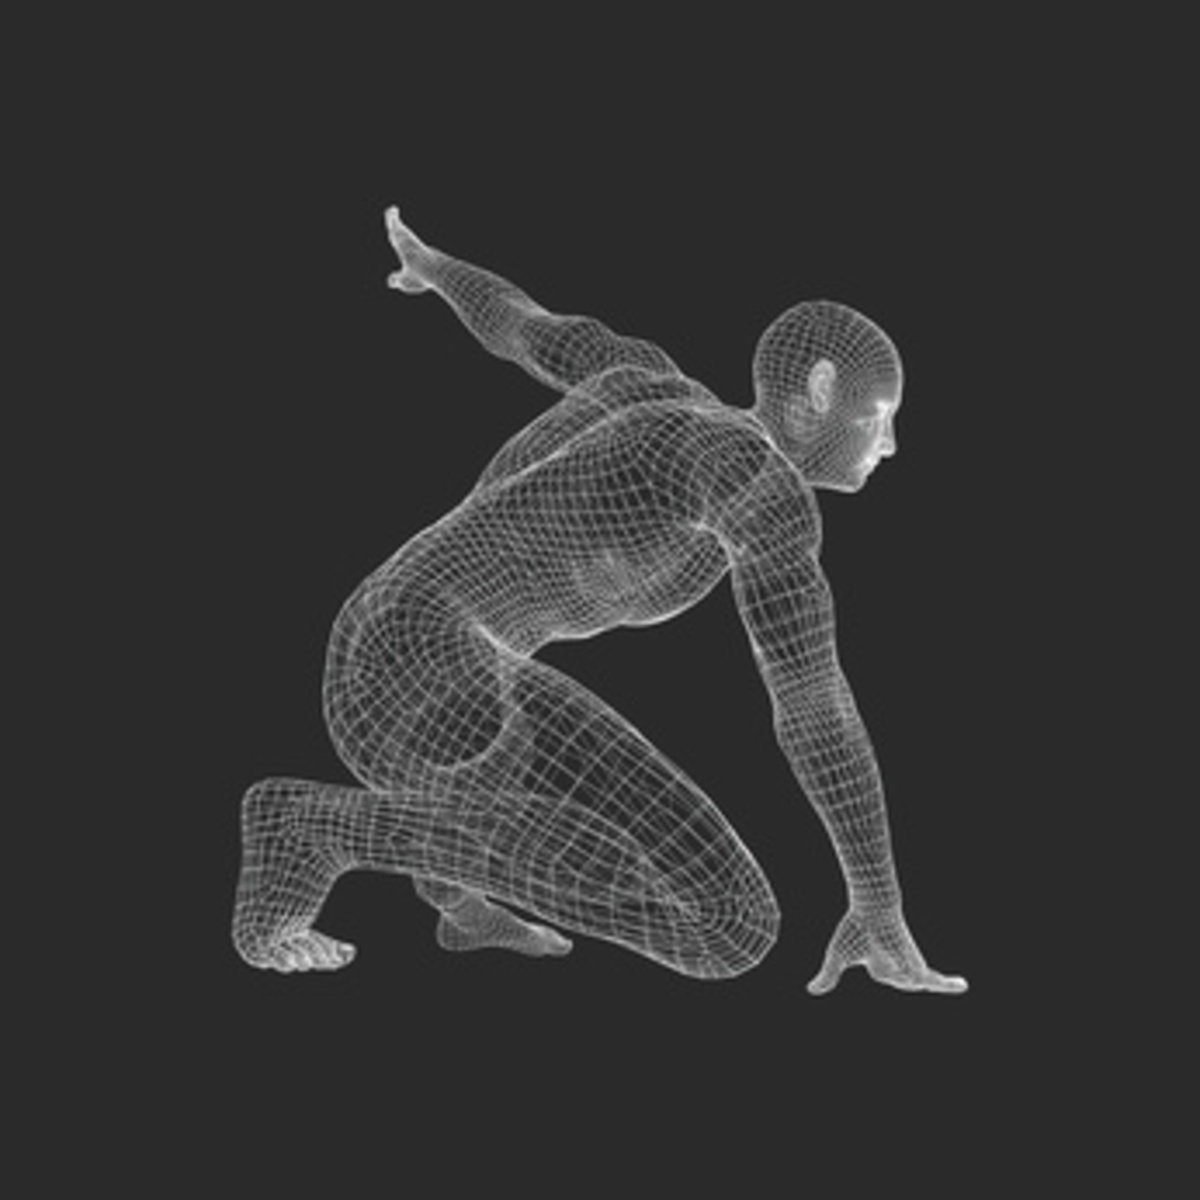 【OSS】Facebook、3D身体表面モデル生成システム「DensePose」をオープンソース公開---2D動画の人体姿勢から3D身体表面モデルを生成